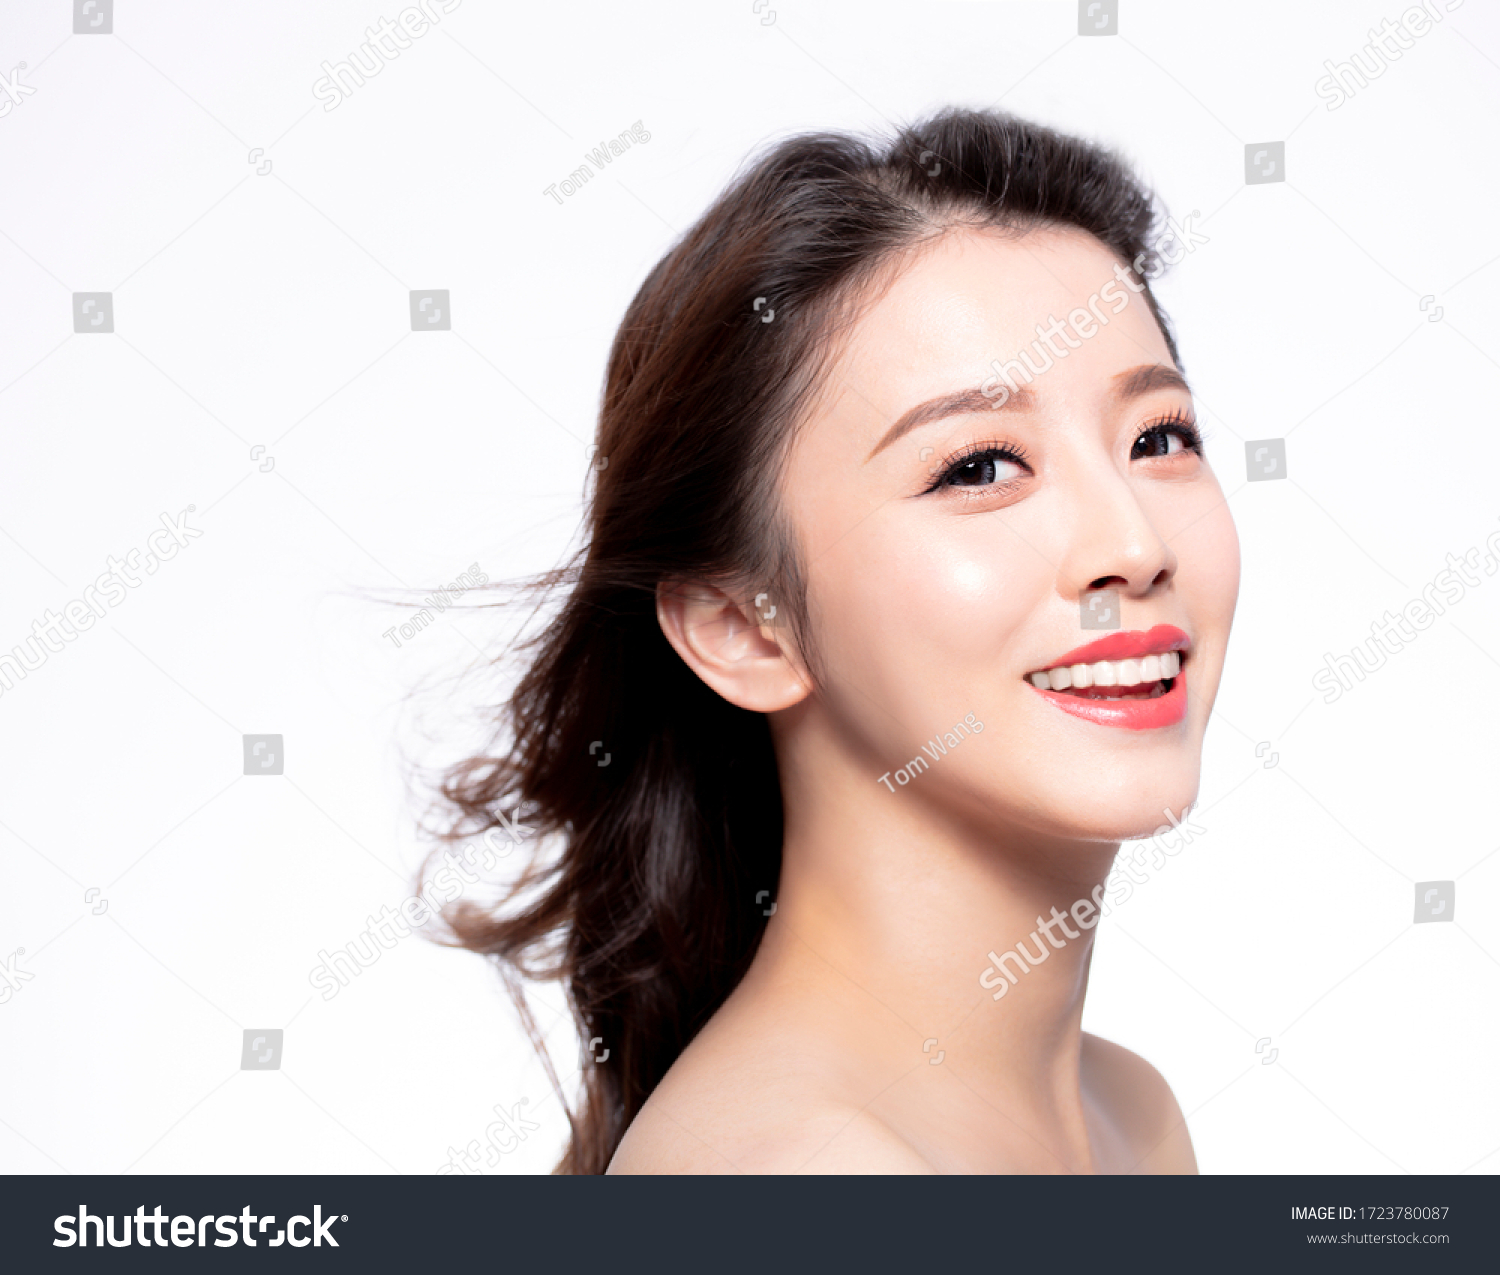 Closeup Young Woman Face Hair Motion Stock Photo 1723780087 Shutterstock